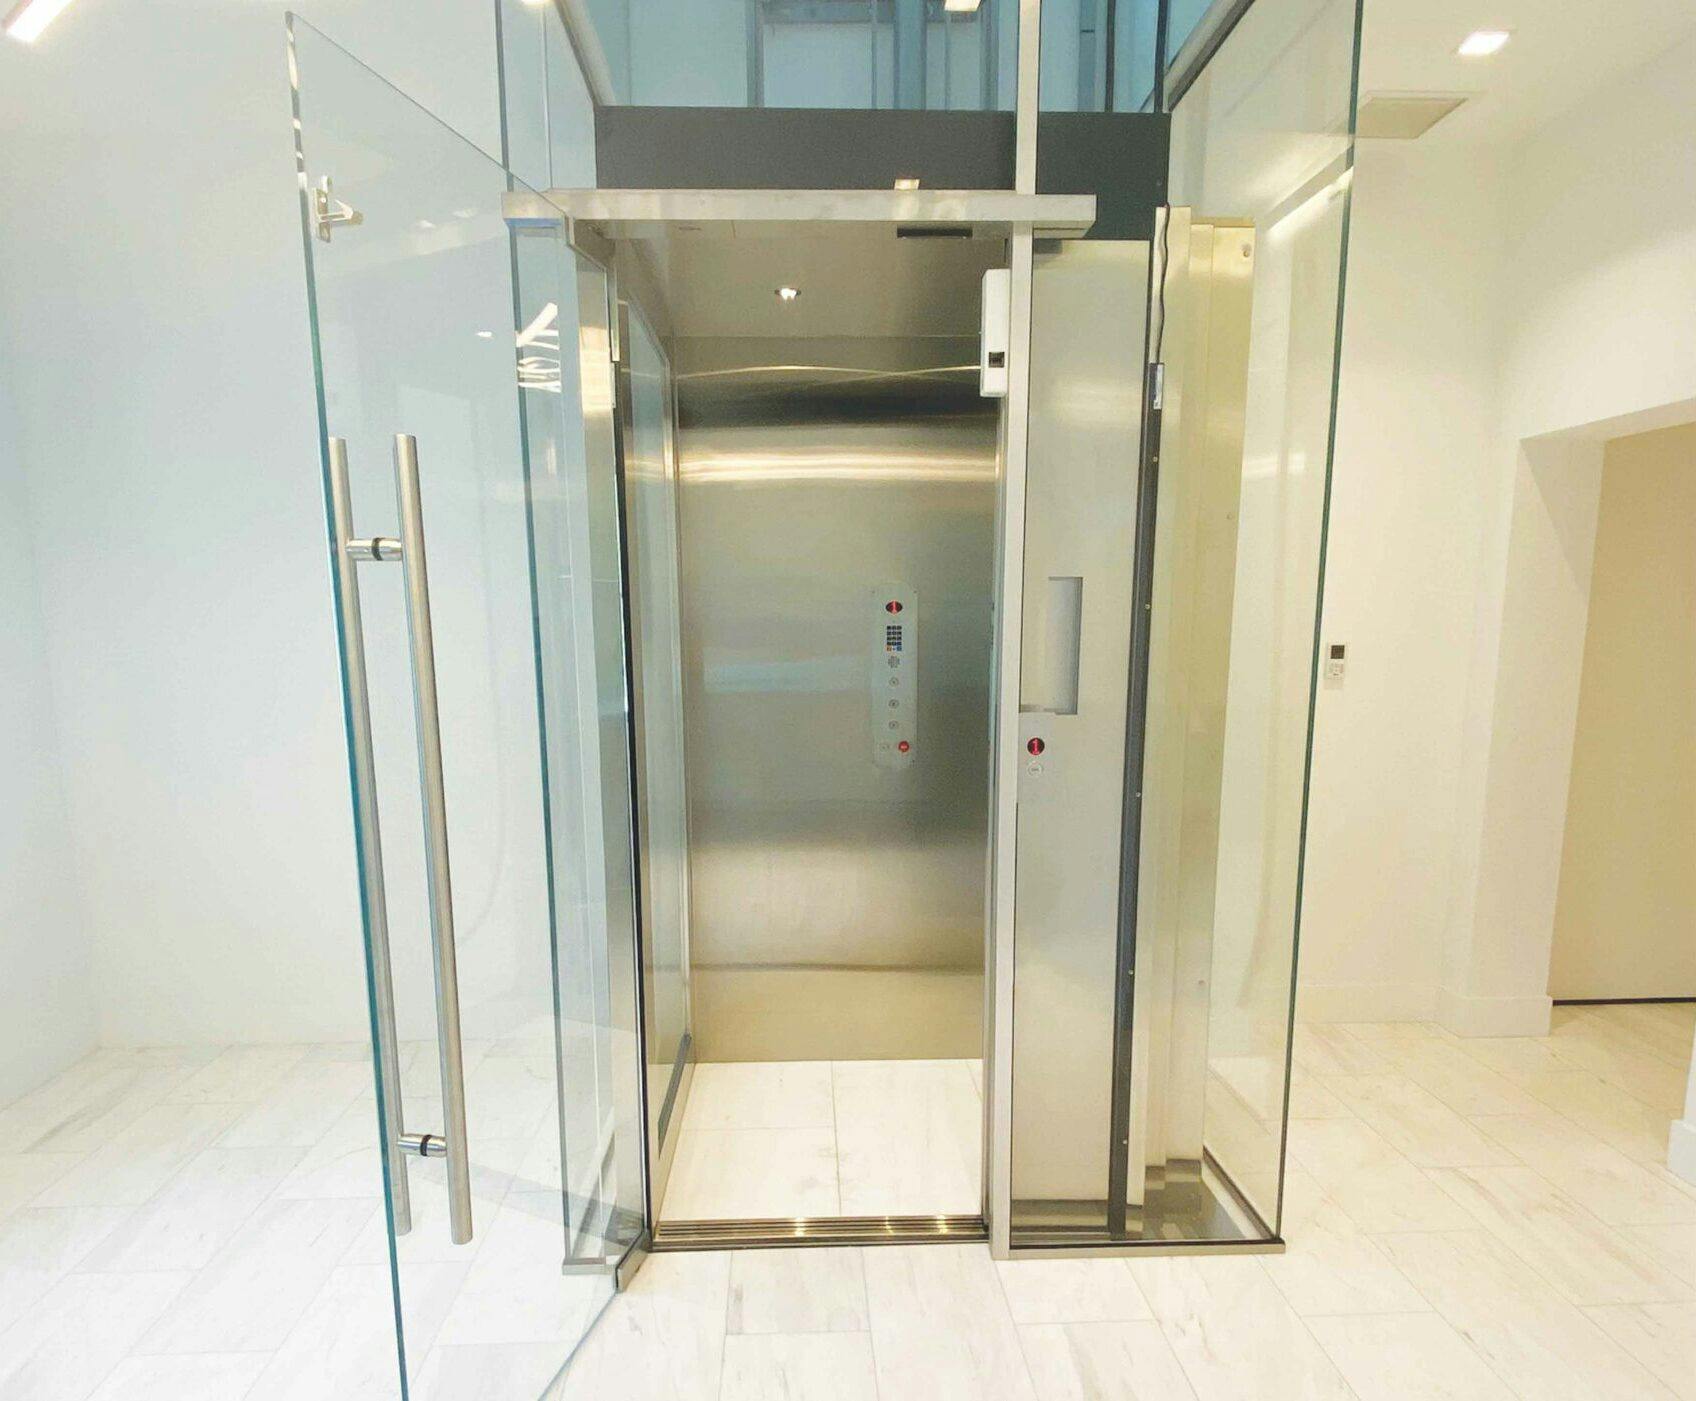 Symmety Custom Home Elevator Stainless Steel Car in Glass Hoistway